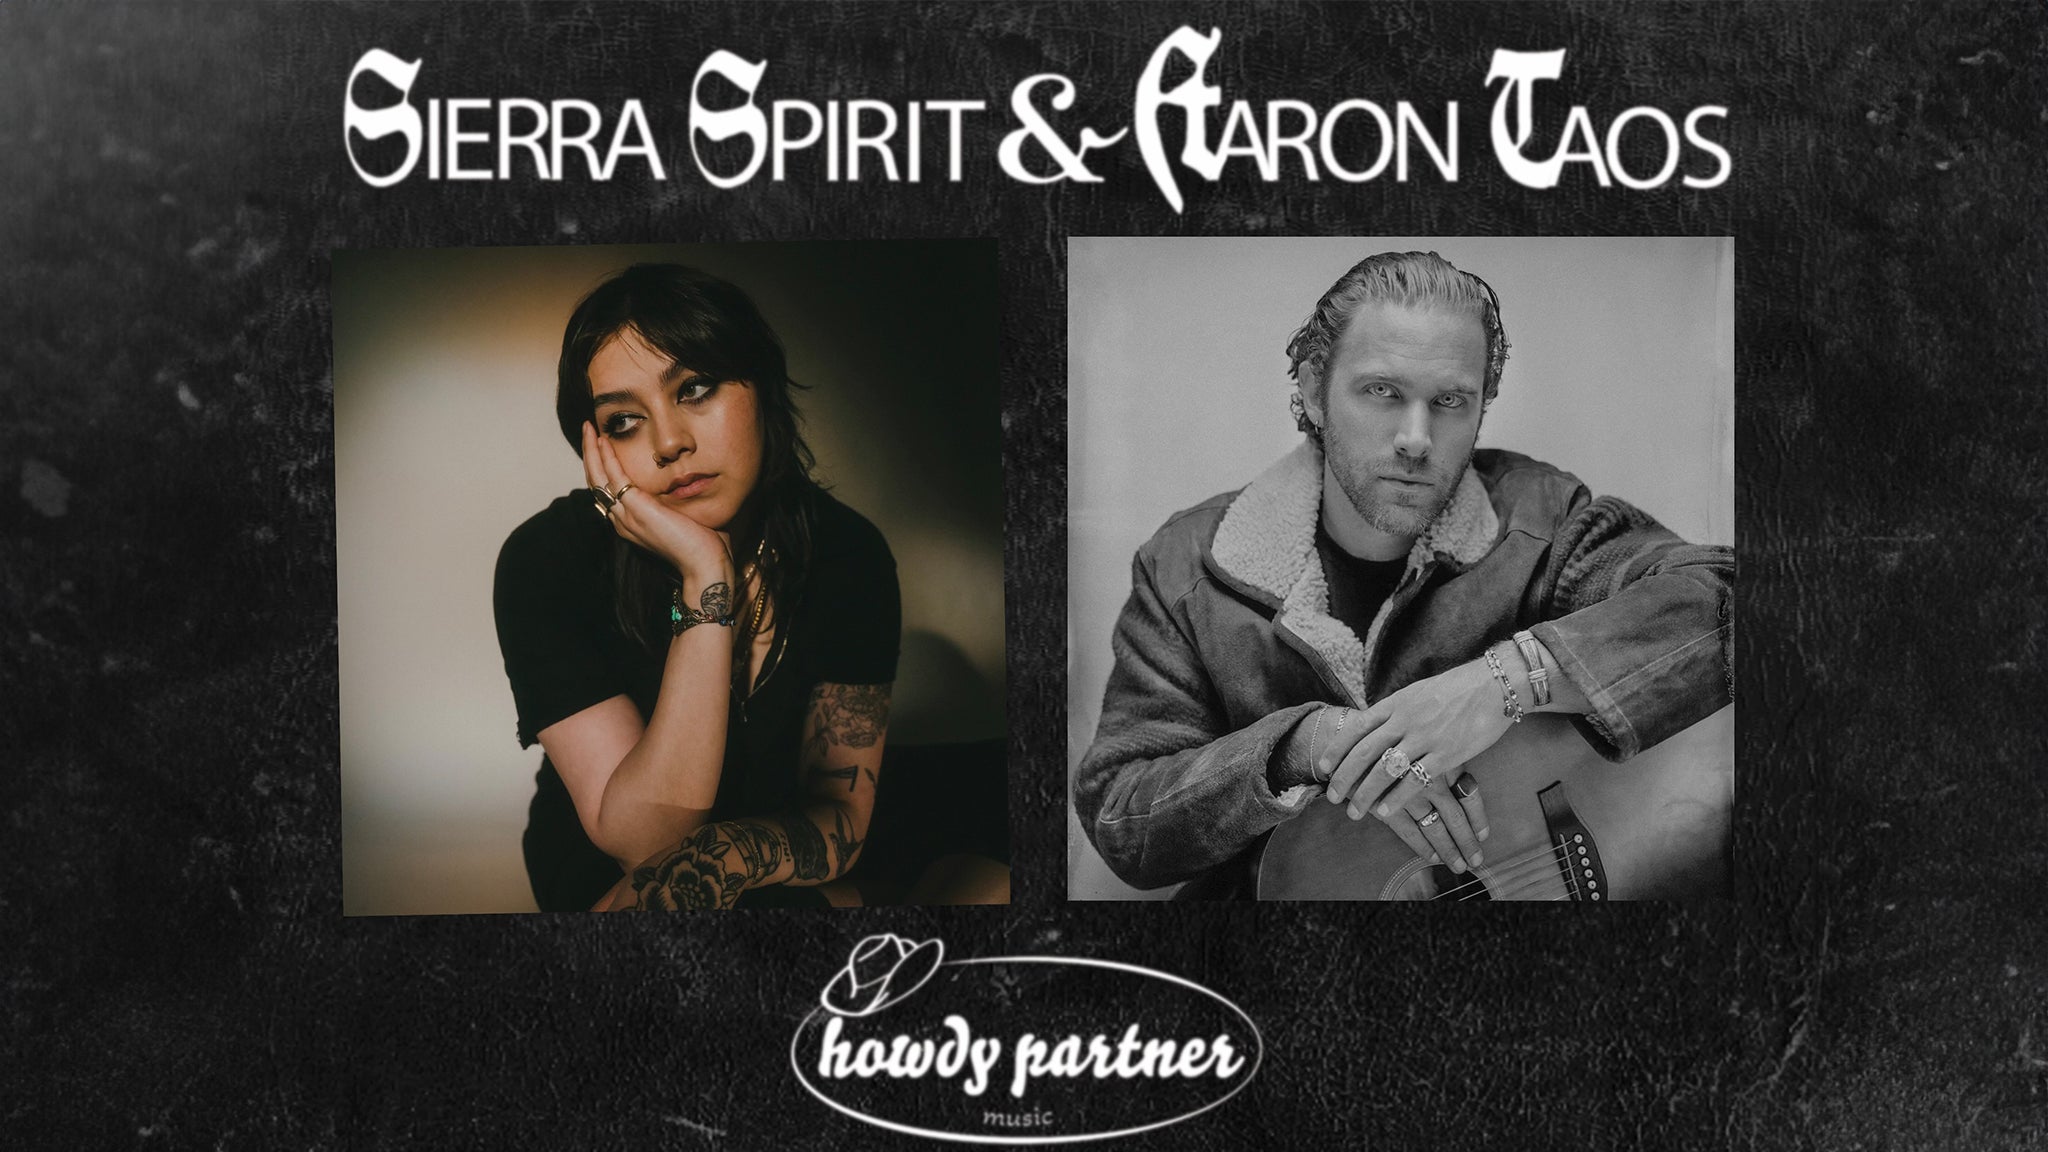 Aaron Taos & Sierra Spirit Howdy Partner Release Show